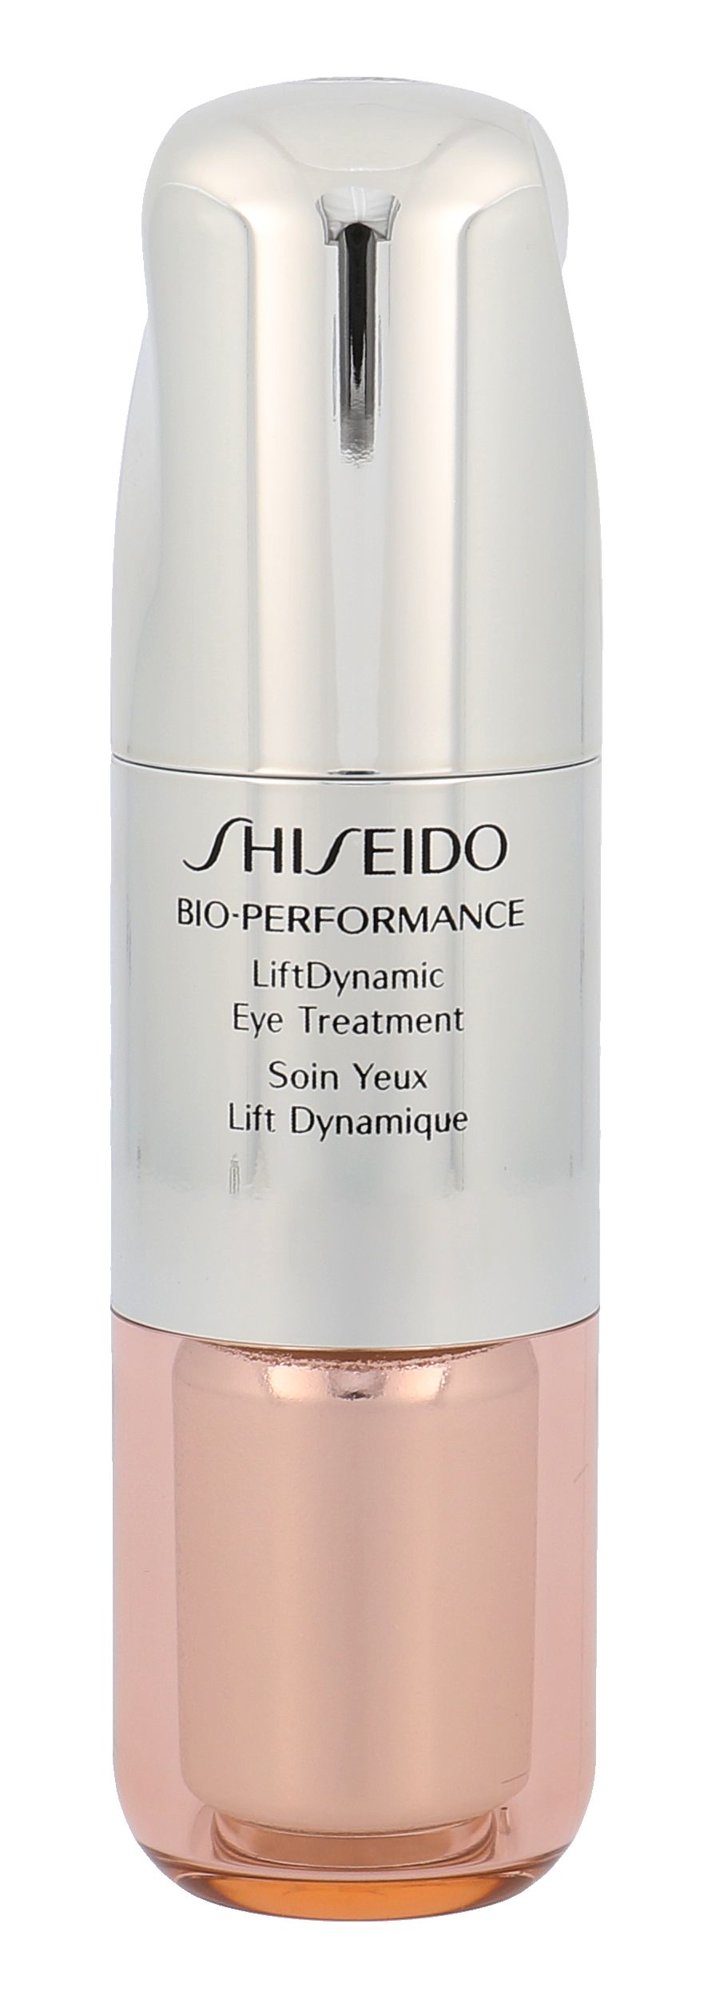 Shiseido Bio-Performance LiftDynamic Eye Treatment 15ml paakių kremas Testeris